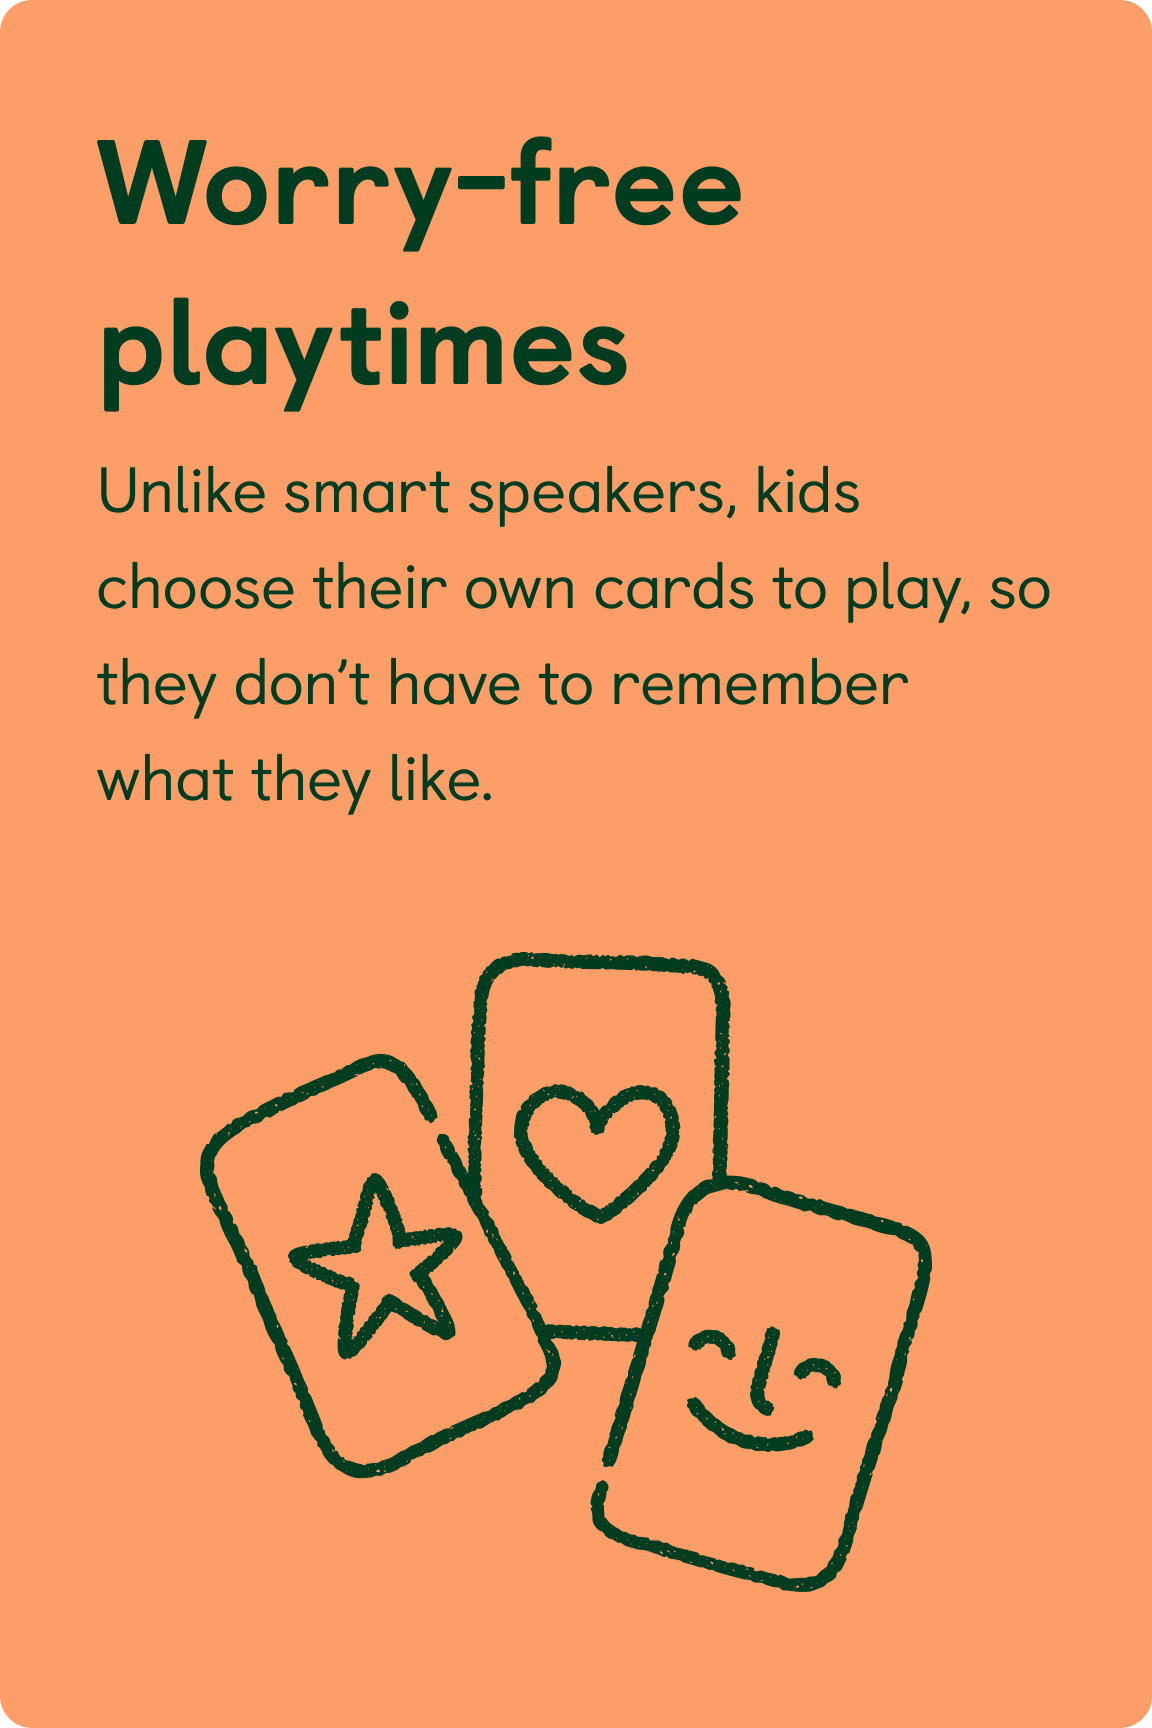 Pester free playtimes. Unlike smart speakers, kids choose their own cards to play